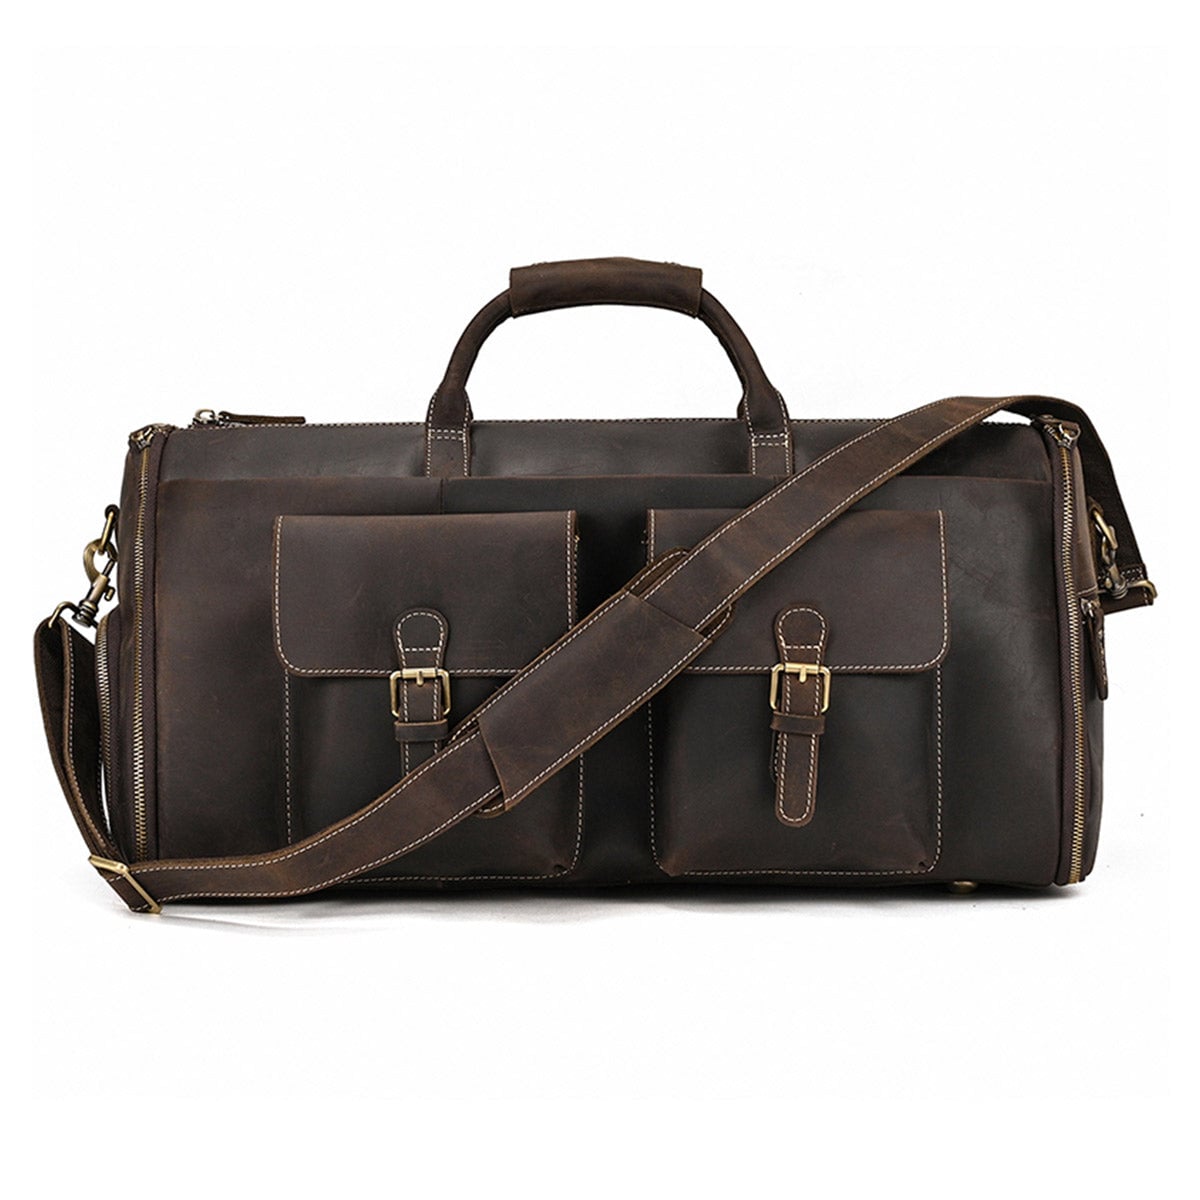 Genuine Leather Suit Bag Multifunctional Foldable Suit Travel Bag